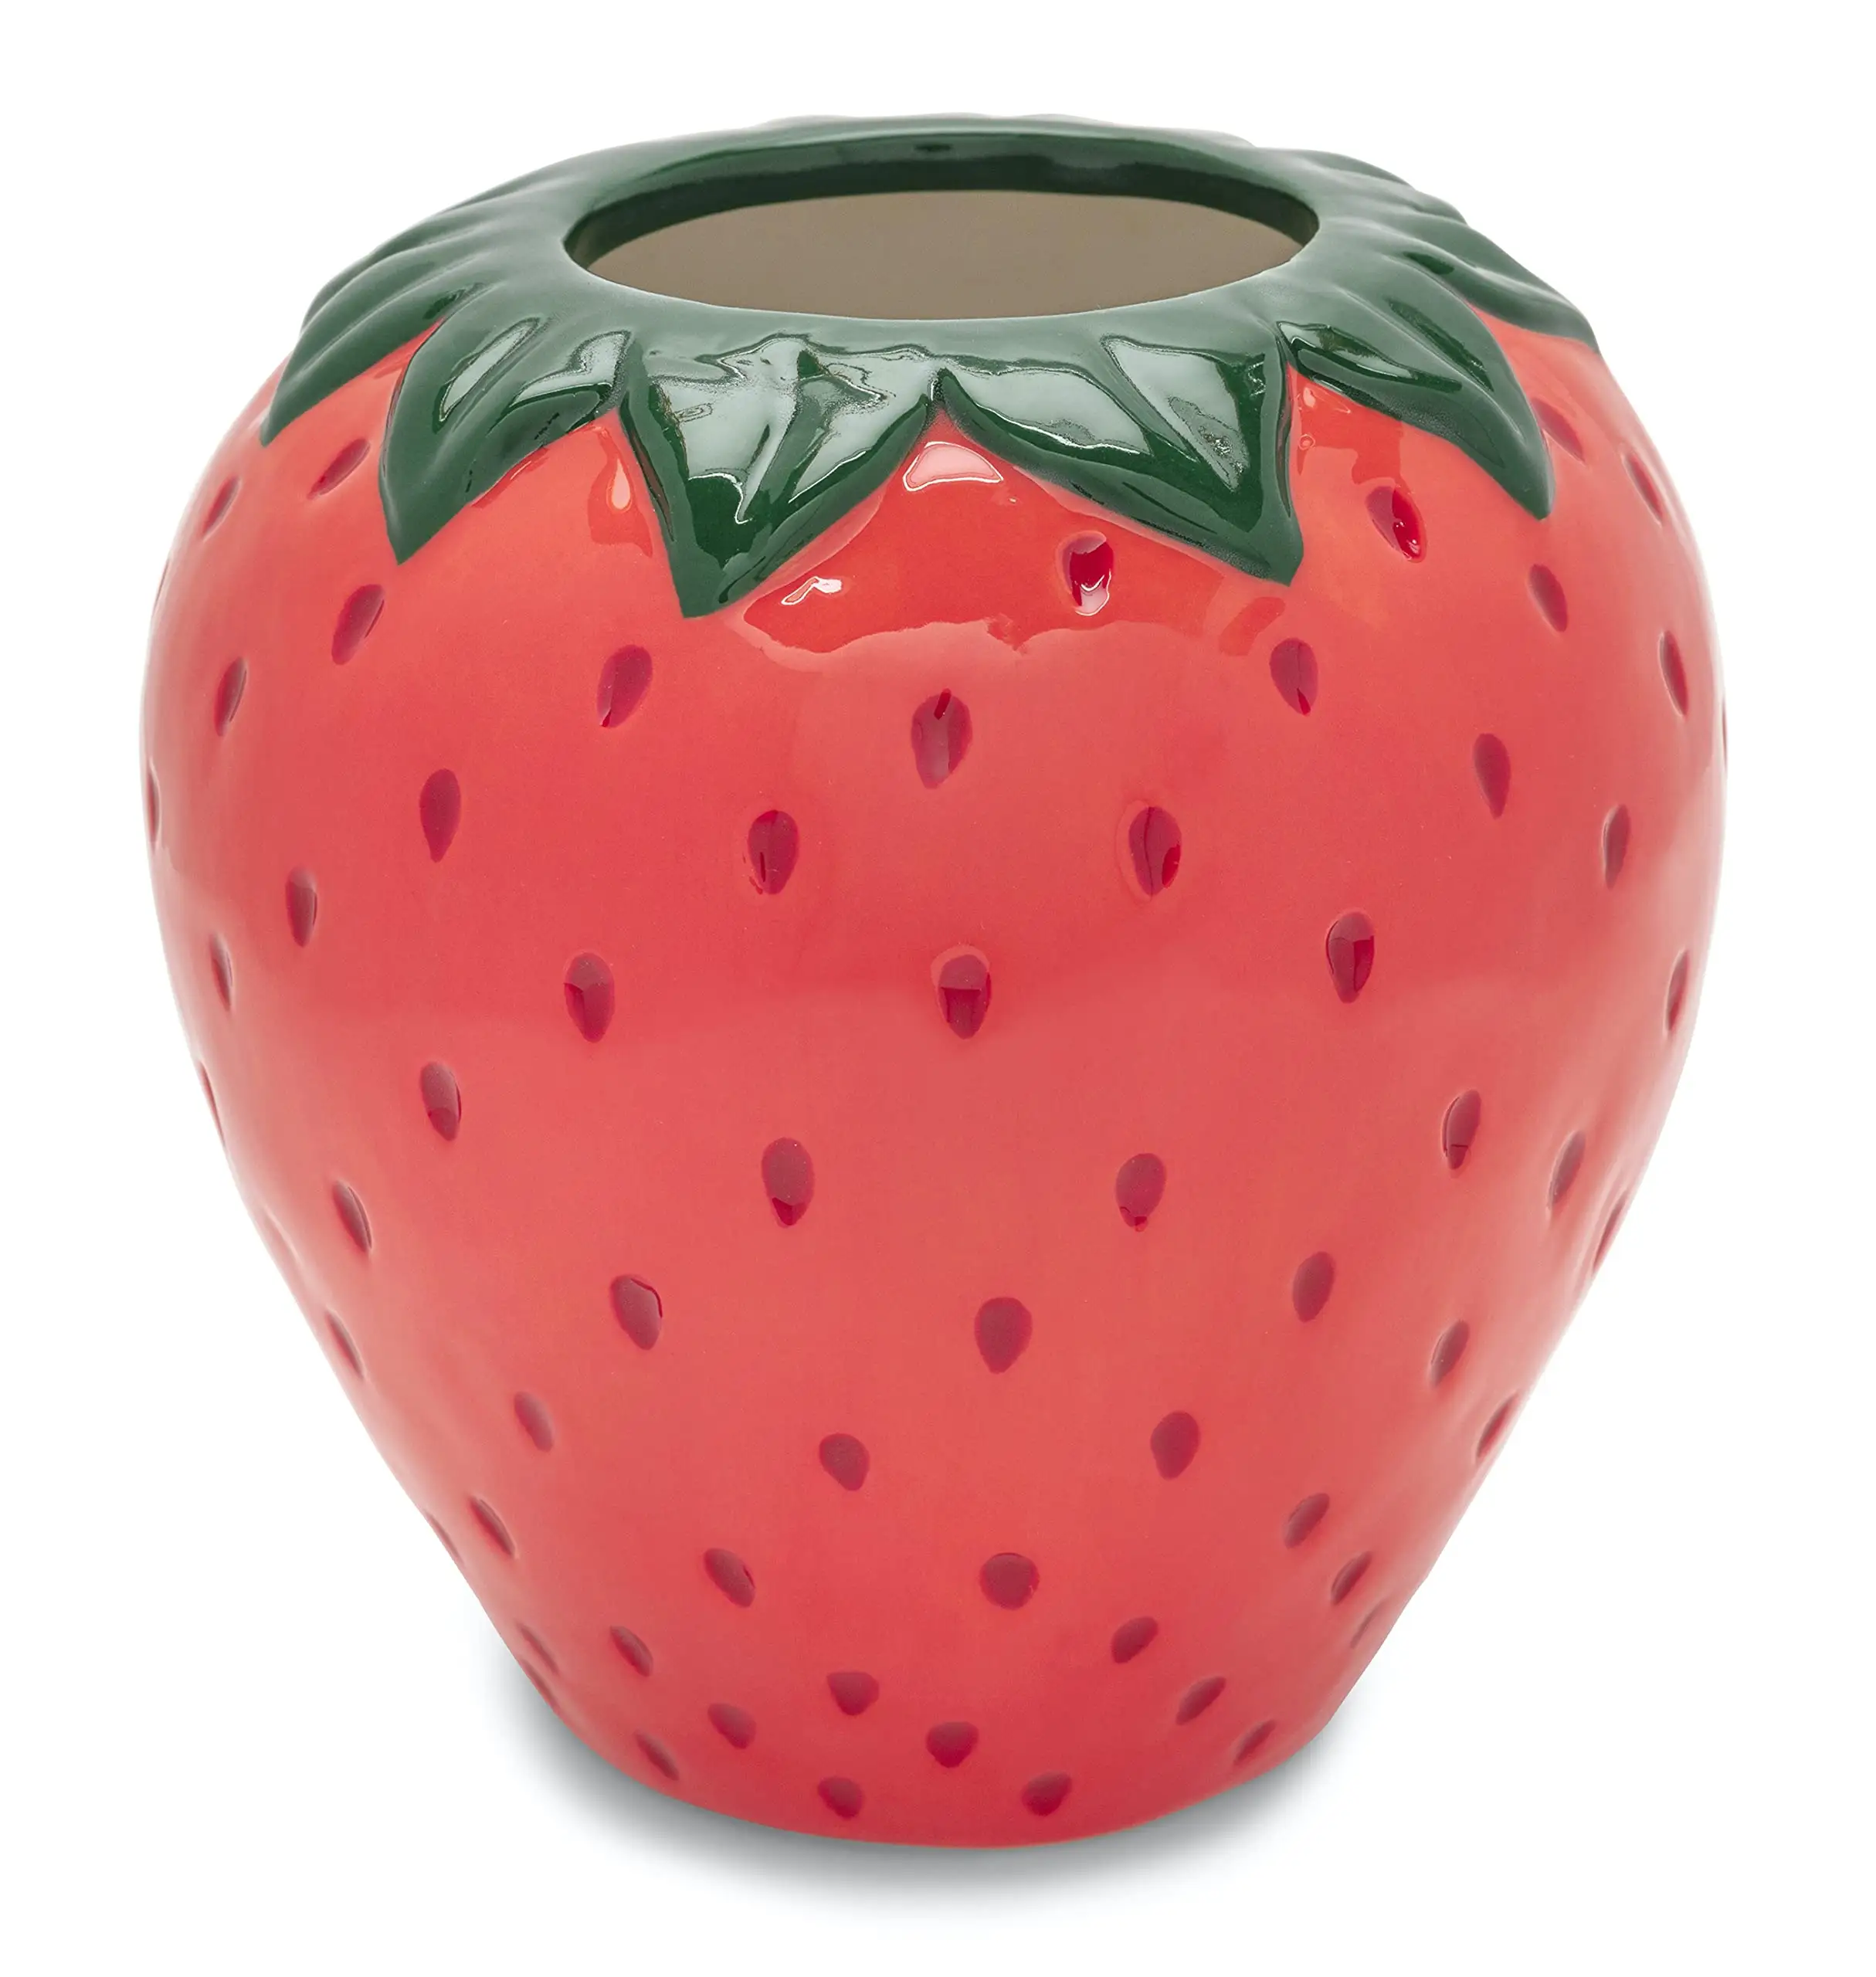 Hot Selling Ornamente Vintage inspiriertes Hotel dekorative kreative Erdbeer blumen arrangement Keramik vase